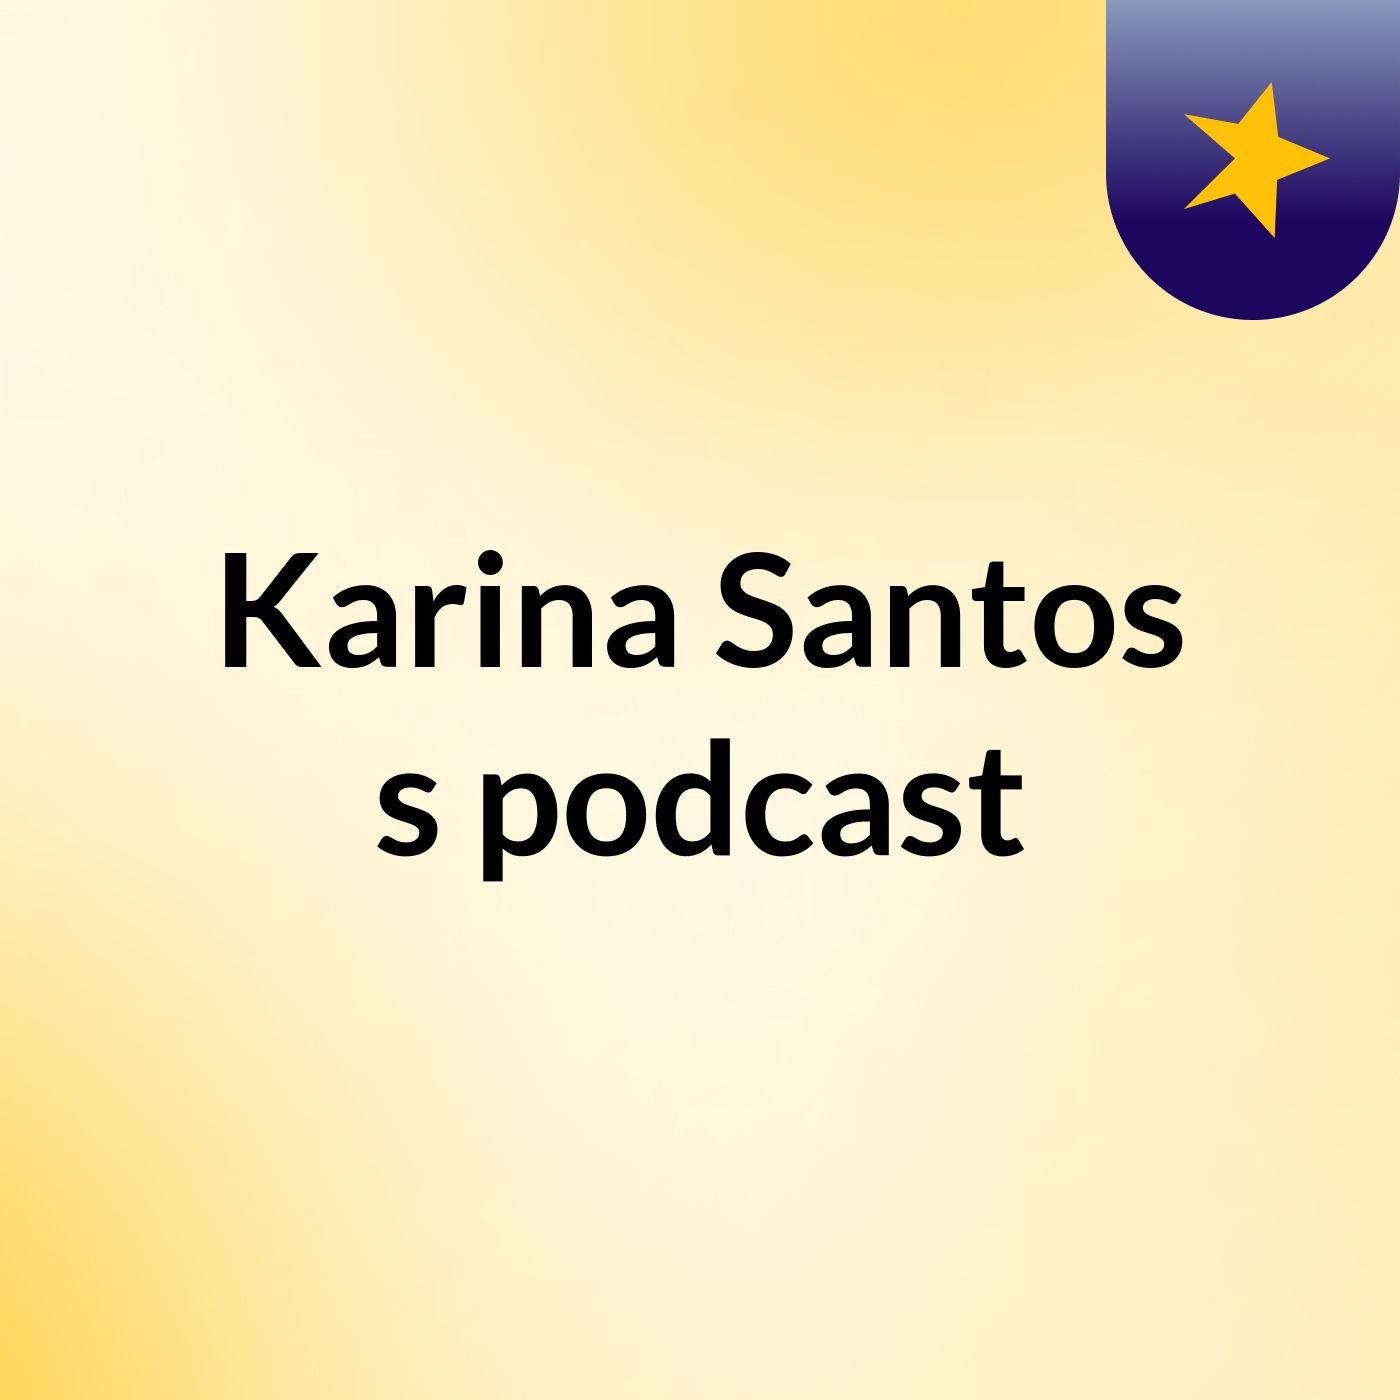 Karina Santos's podcast